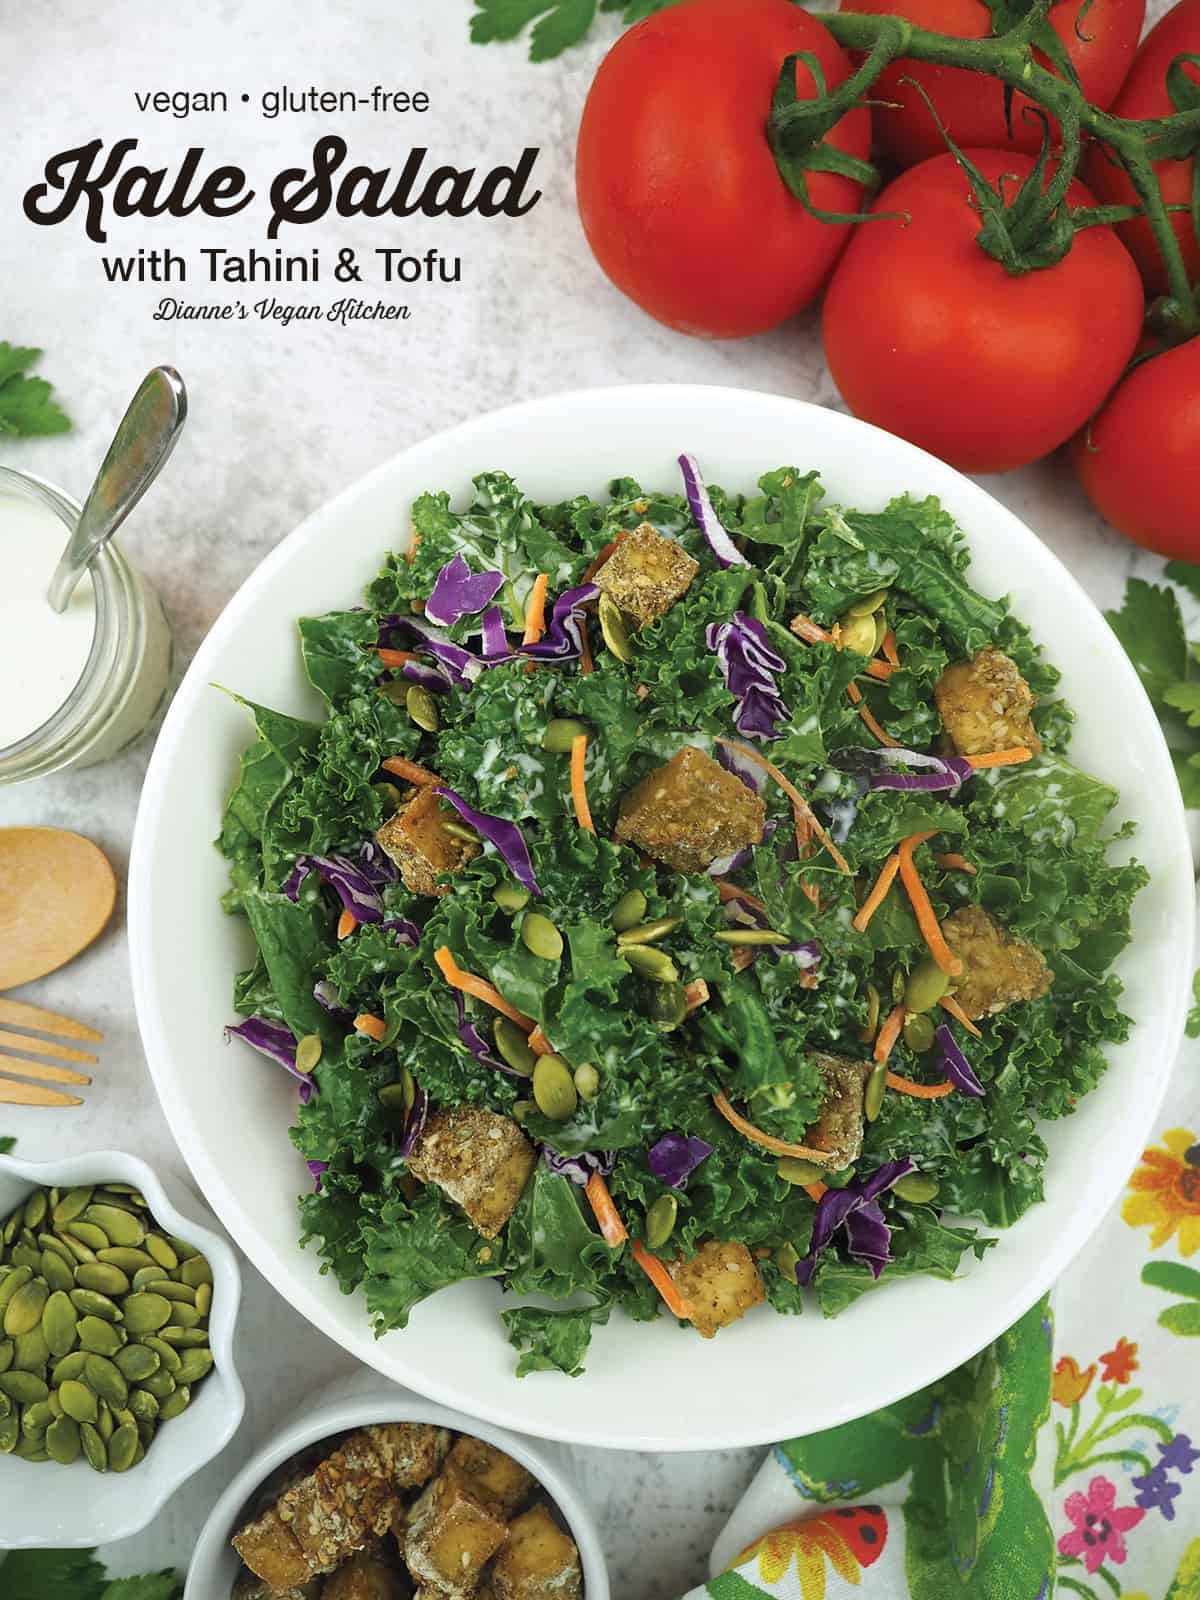 Kale Salad with Tofu and Tahini with text overlay